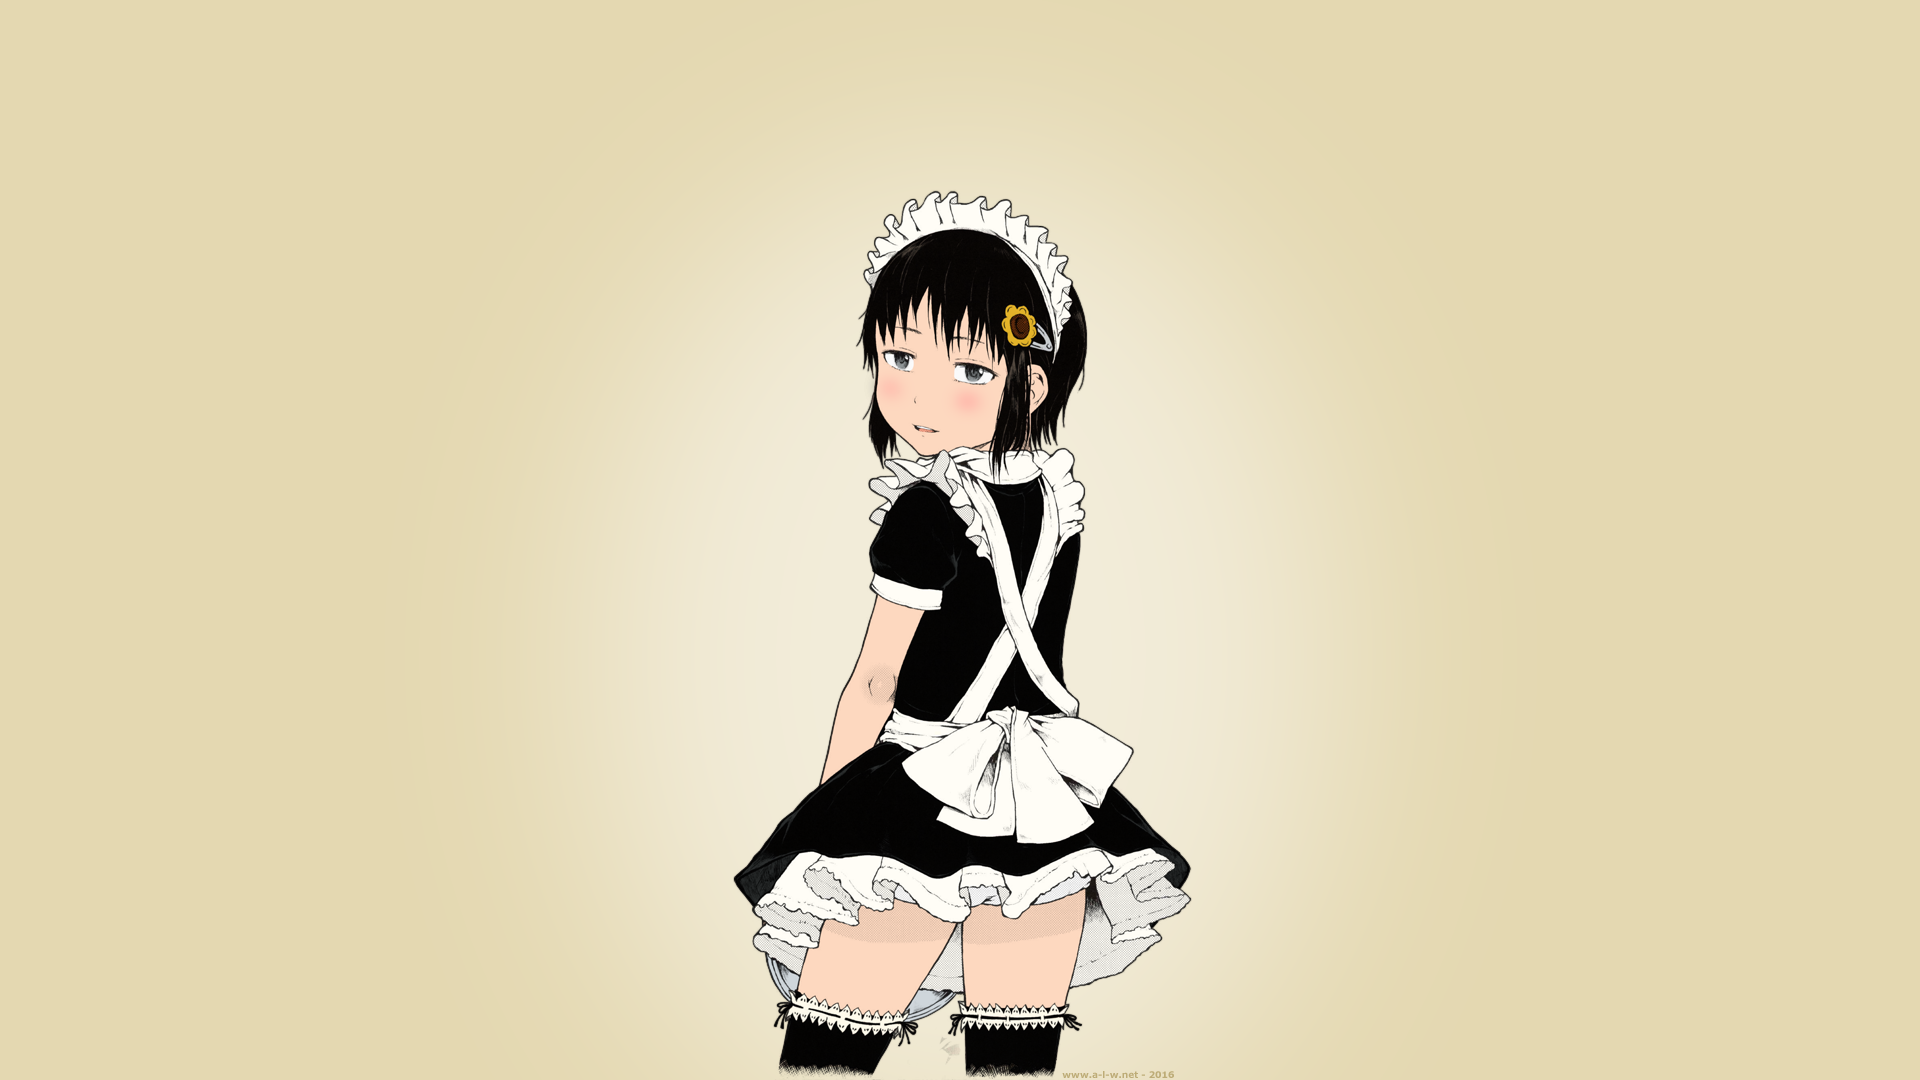 Anime 1920x1080 Zangyaku maid panties stockings short hair black hair anime manga anime girls beige background simple background maid outfit